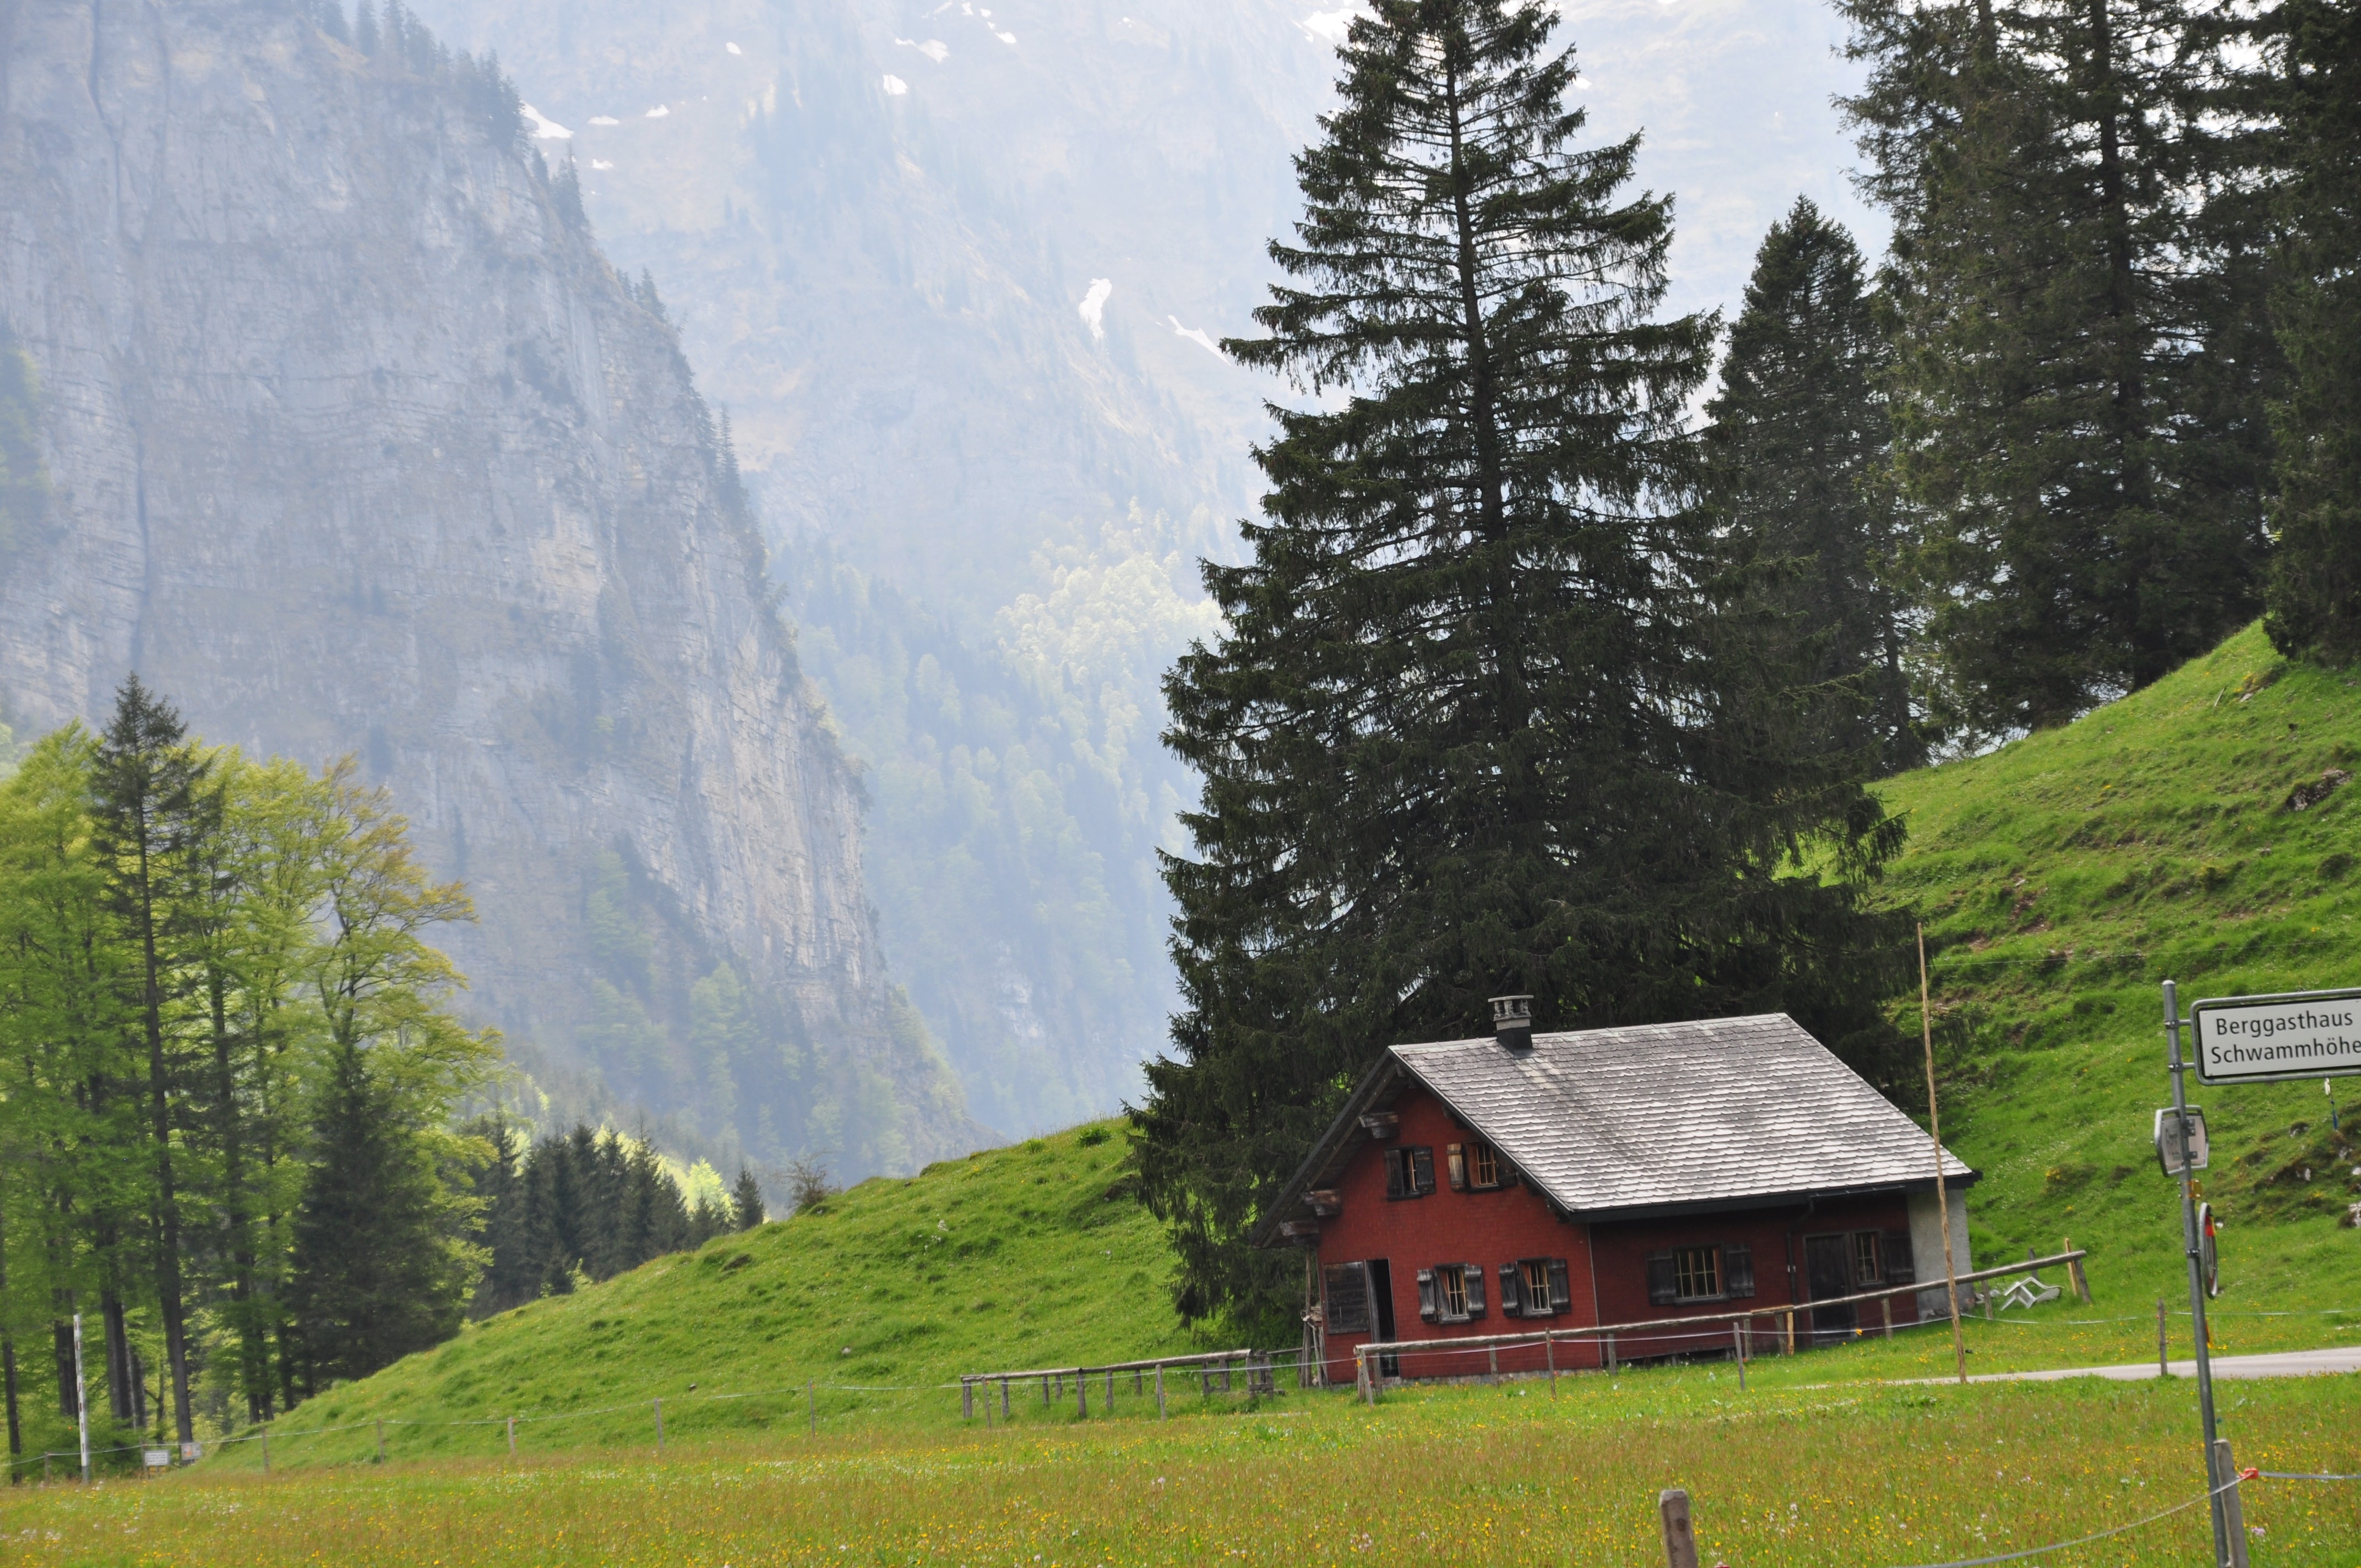 General 4288x2848 nature mountains trees hut landscape Switzerland